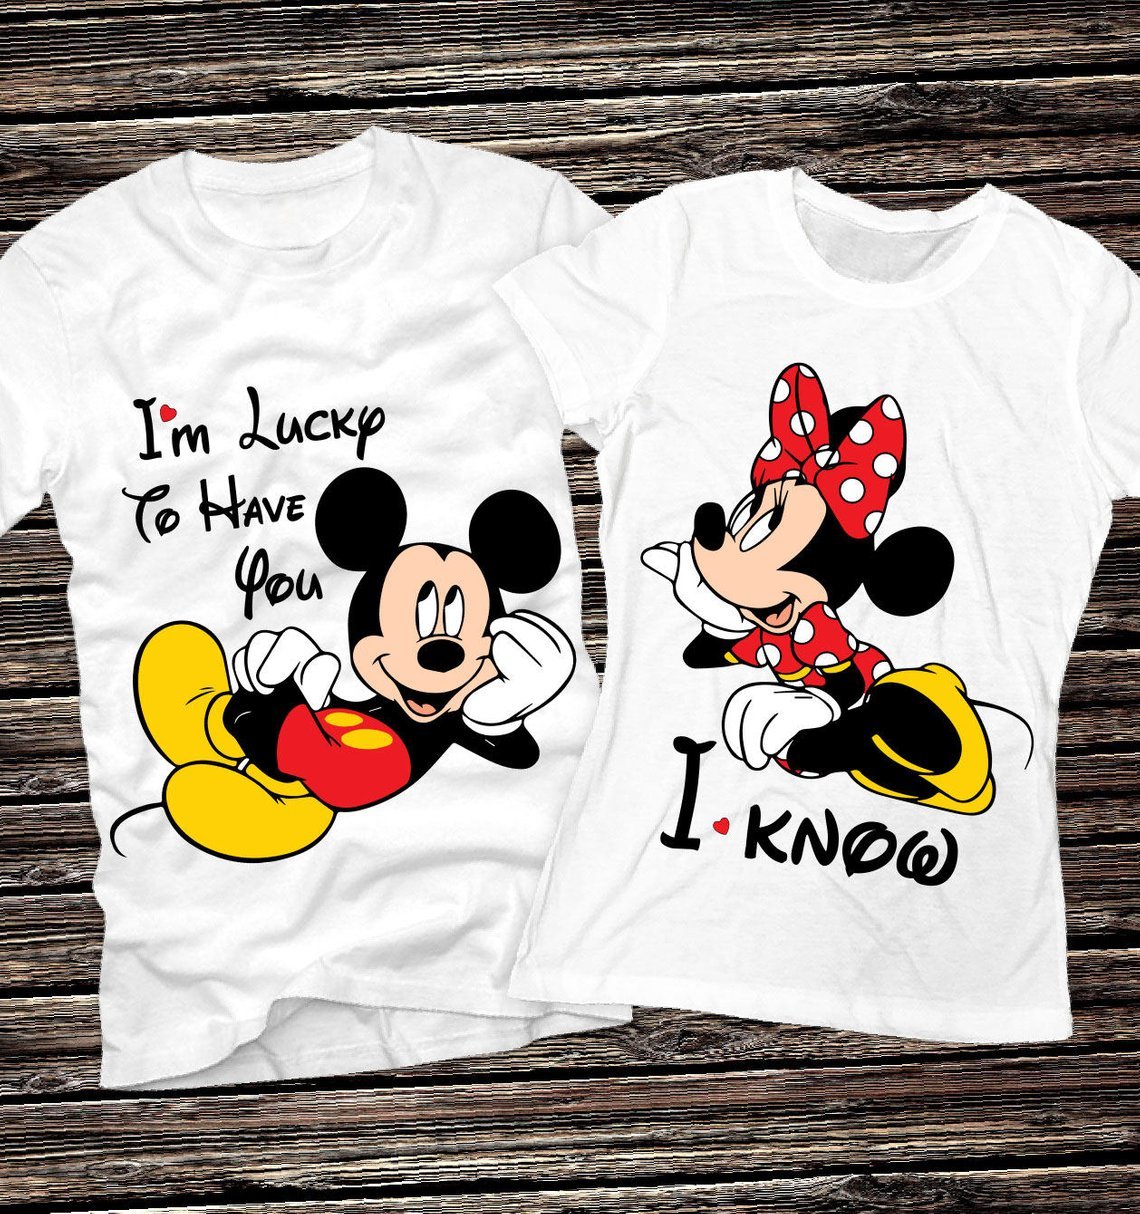 Disney Couple T-Shirt Disney Matching t-Shirts,TH-DL-230601 Disney Custom Honeymoon Shirts Carl And Ellie TShirt Disney Balloon Tee